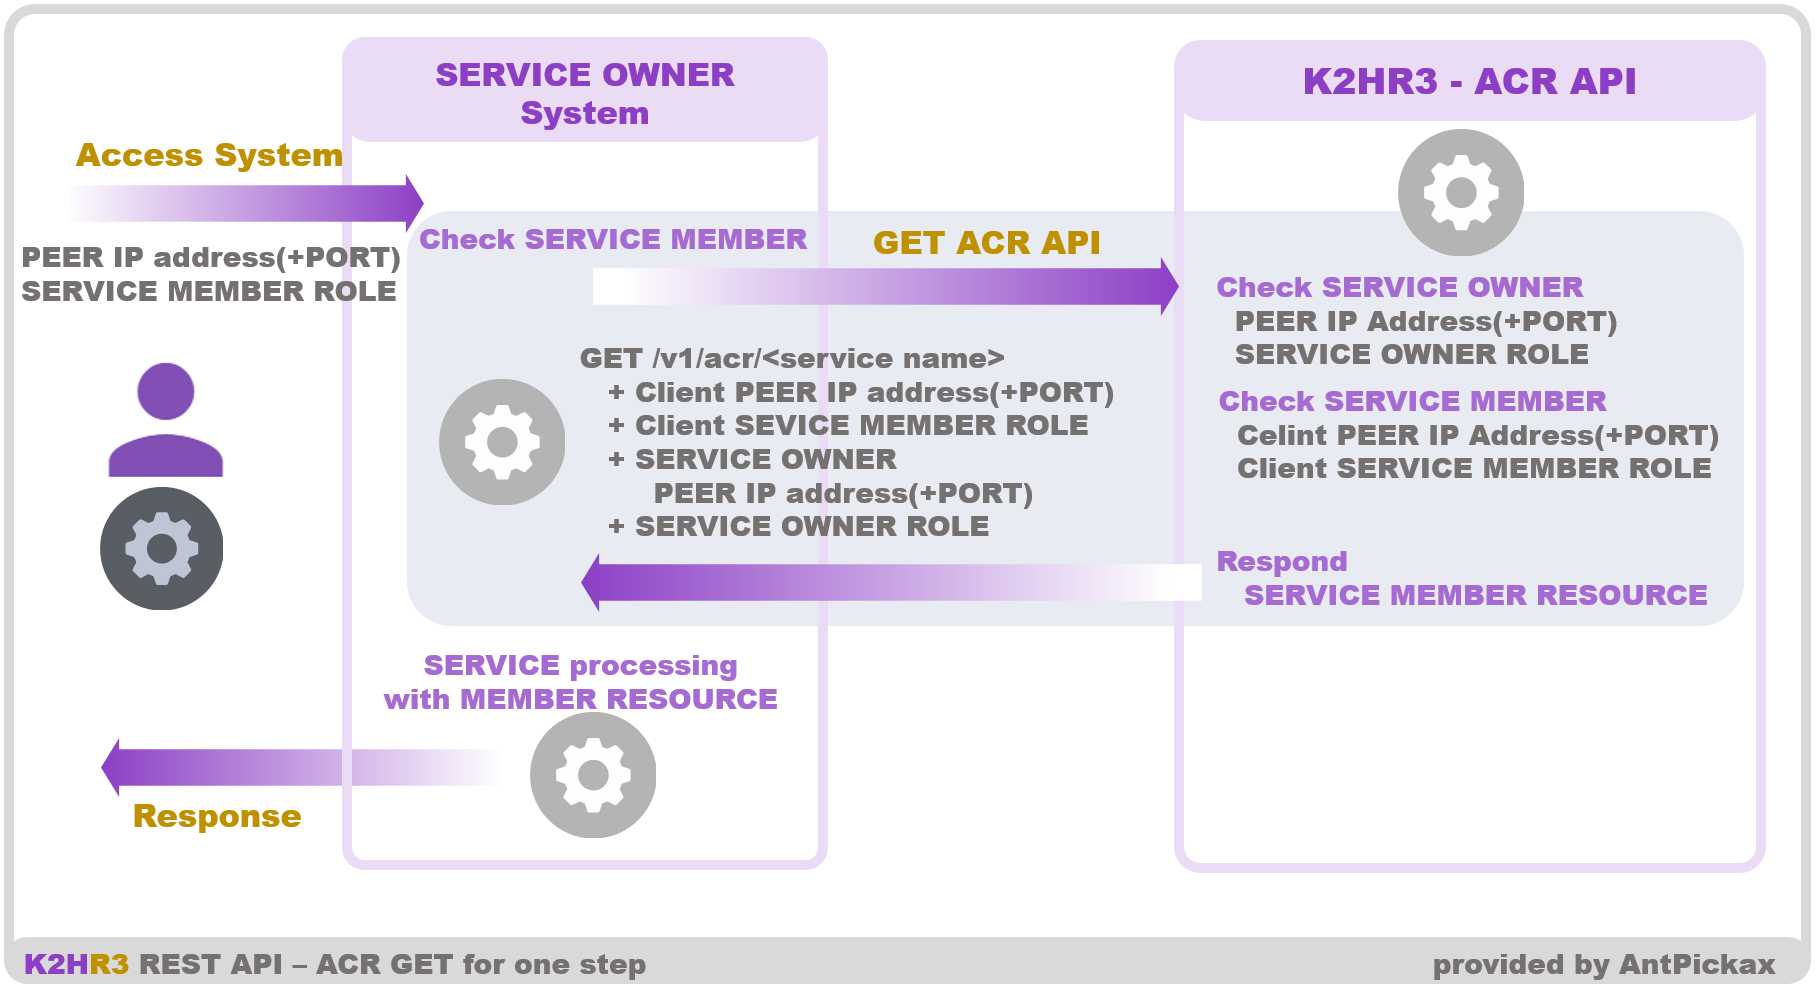 K2HR3 REST API - ACR GET for one step